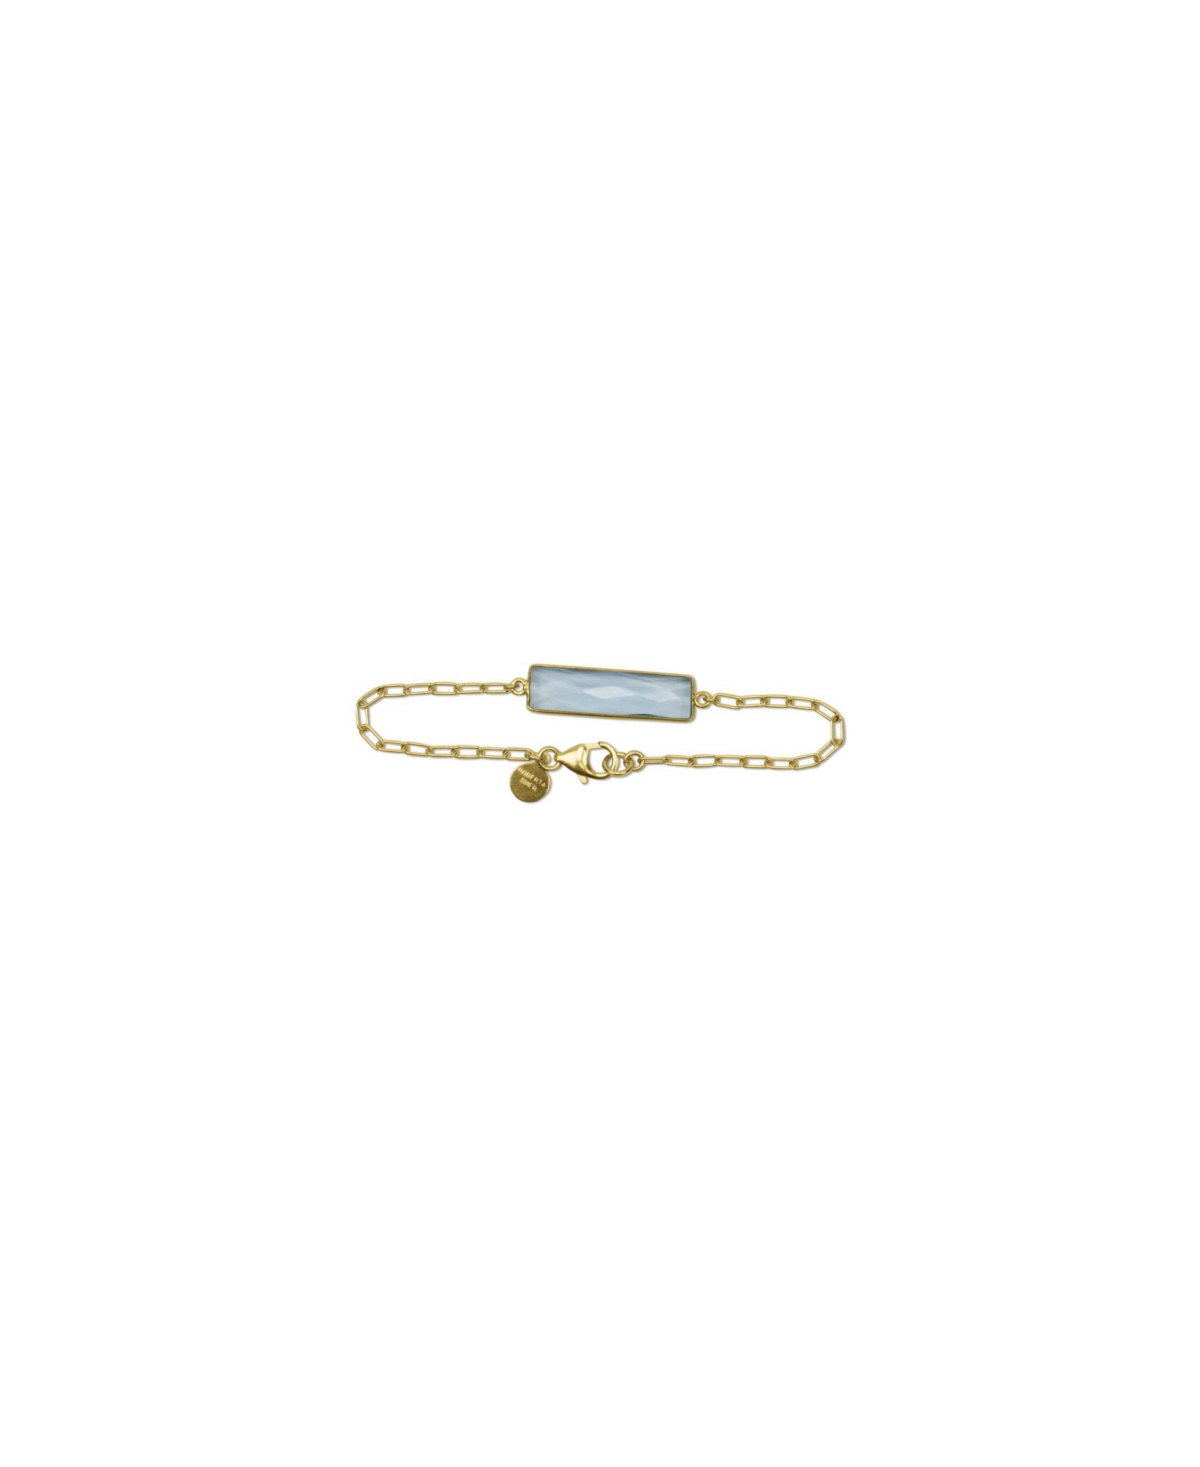 Bezel Set Topaz Bar Bracelet with 14K Gold Fill Chain - Gold - Fill